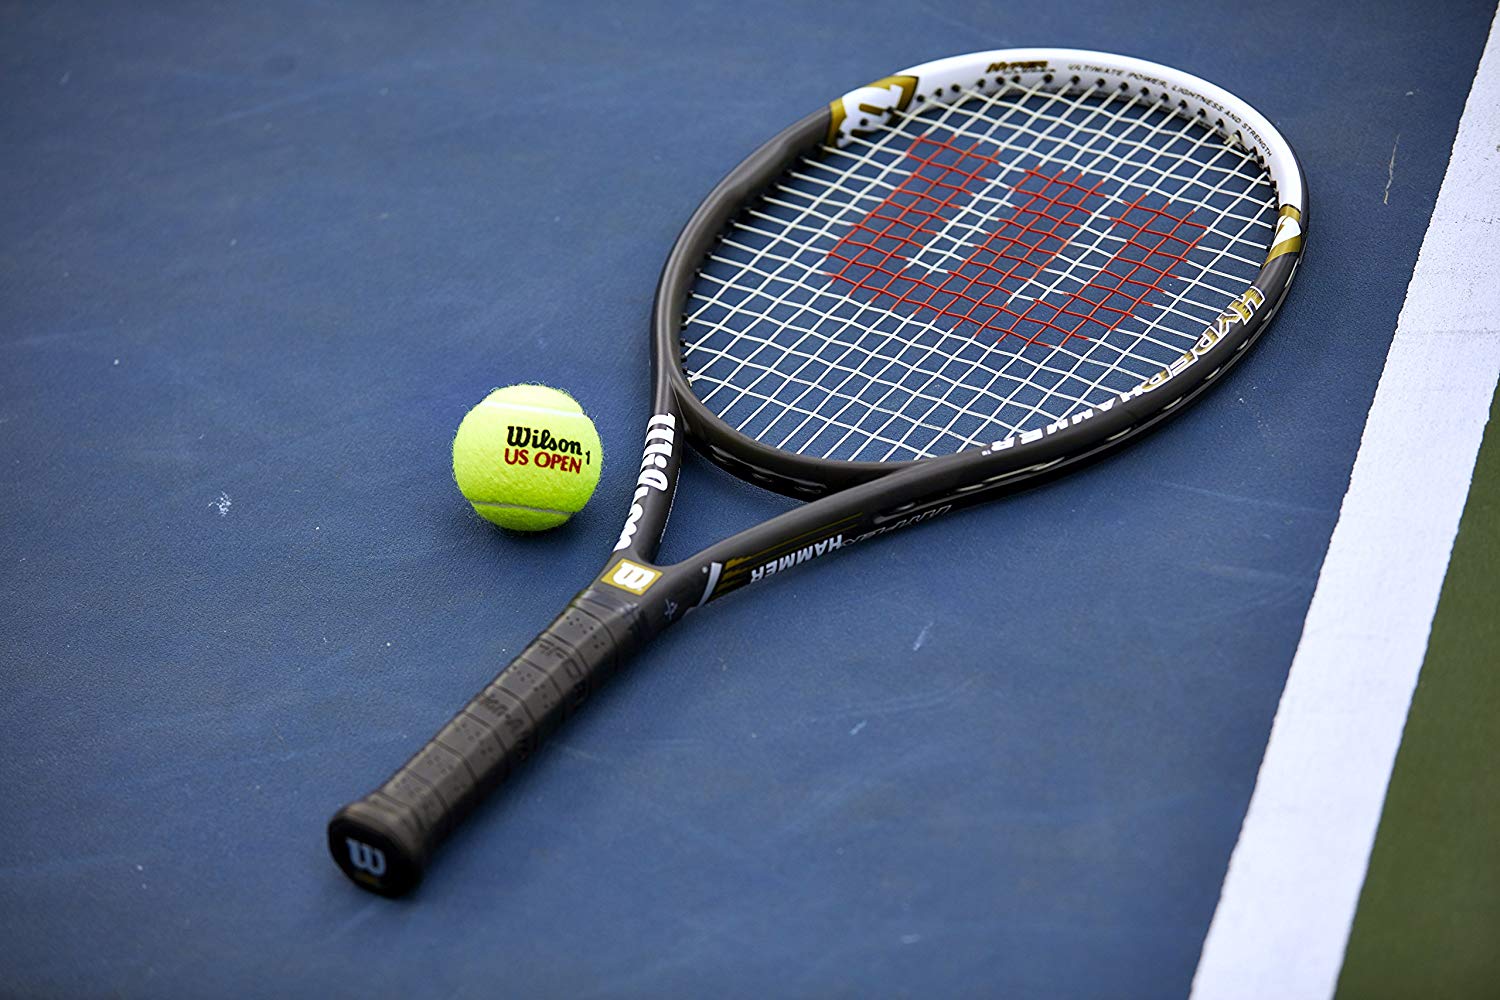 Wilson Federer Adult Strung Tennis Racket Review (2021): For Beginners?